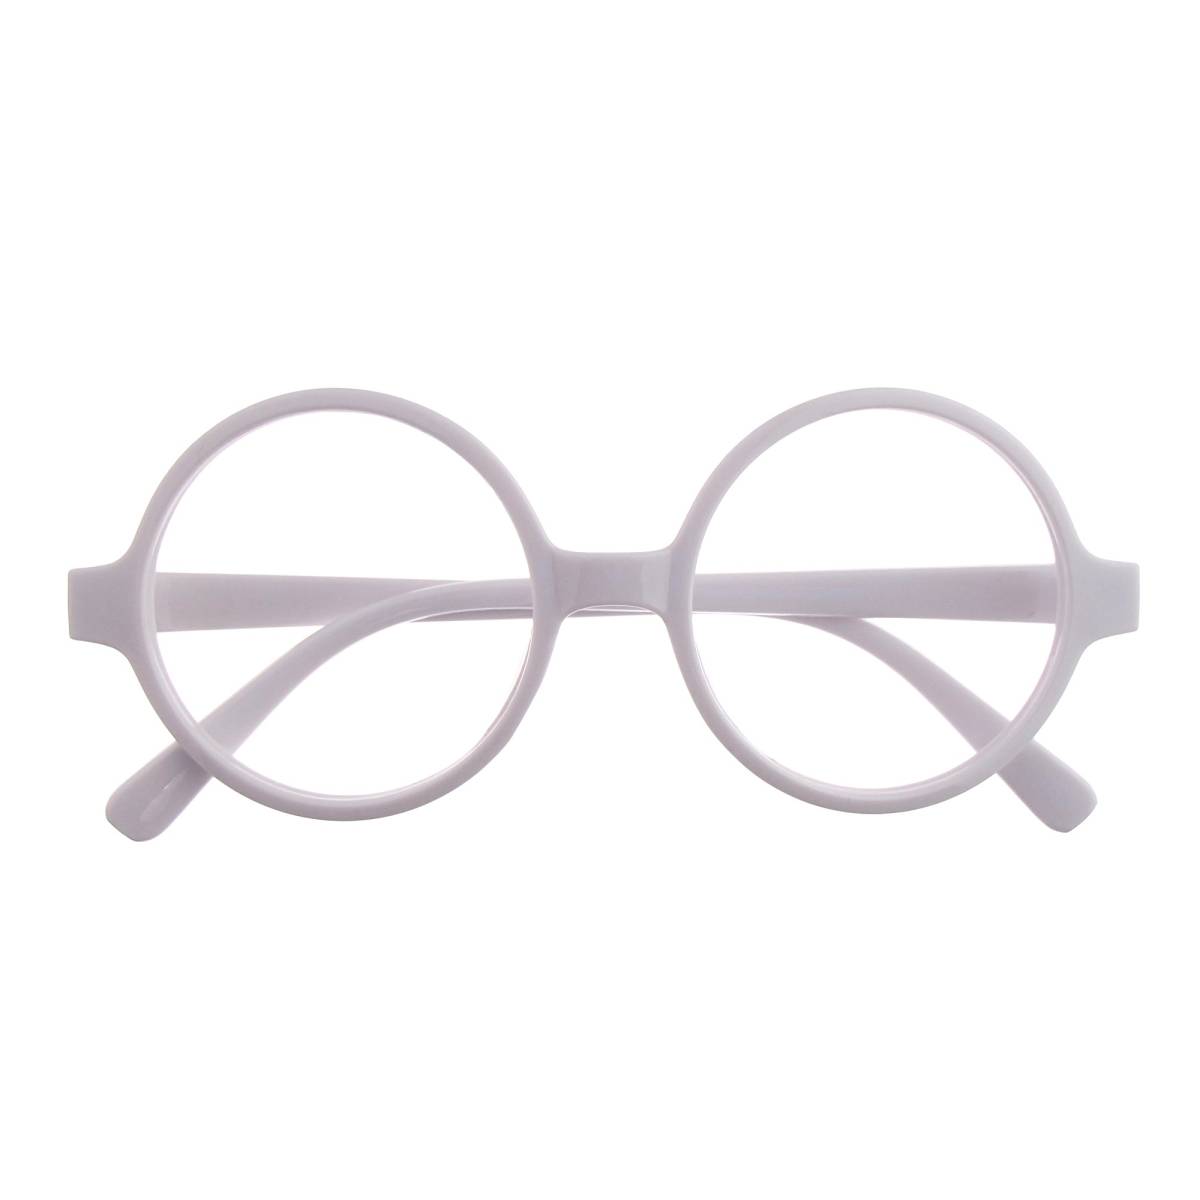  round type no lenses fashionable eyeglasses ( lens none ) circle glasses circle glasses white man and woman use 